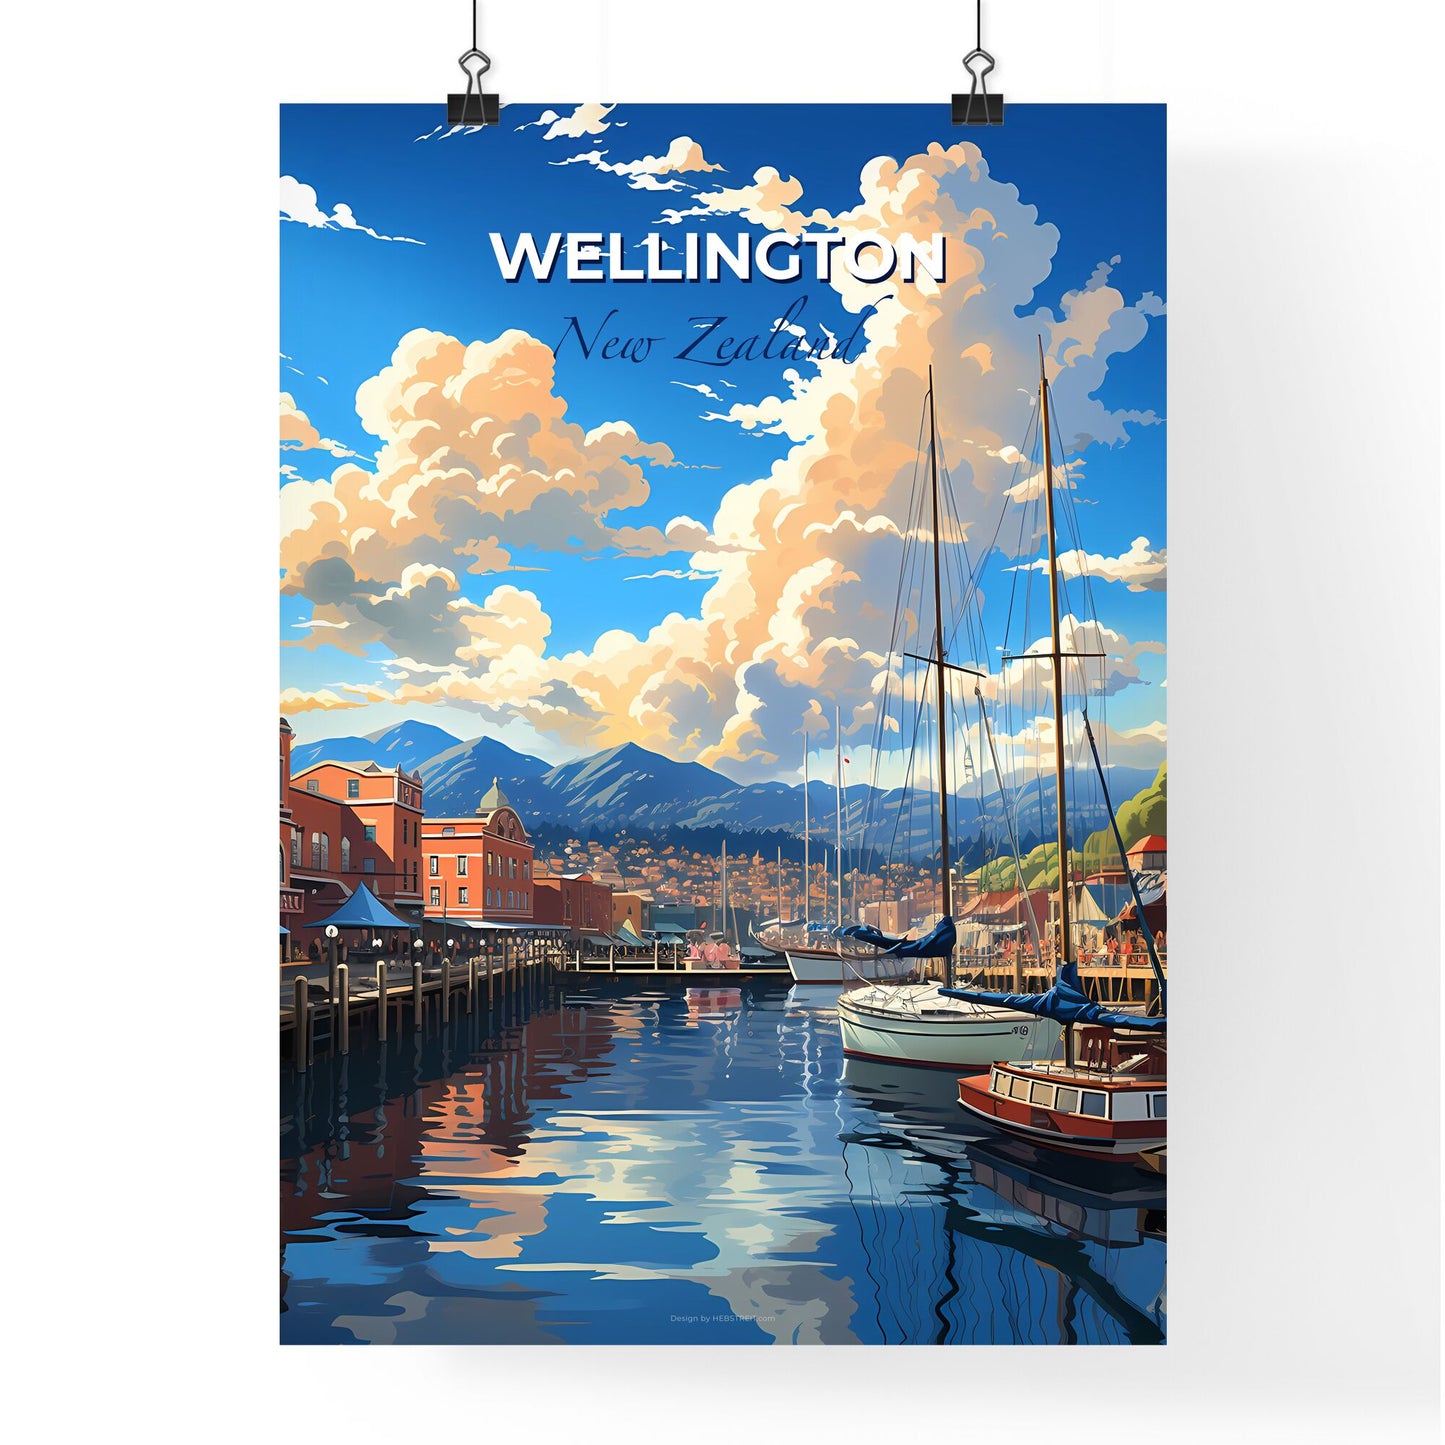 Wellington Skyline Art Print - Vibrant Cityscape with Boats and Buildings Default Title